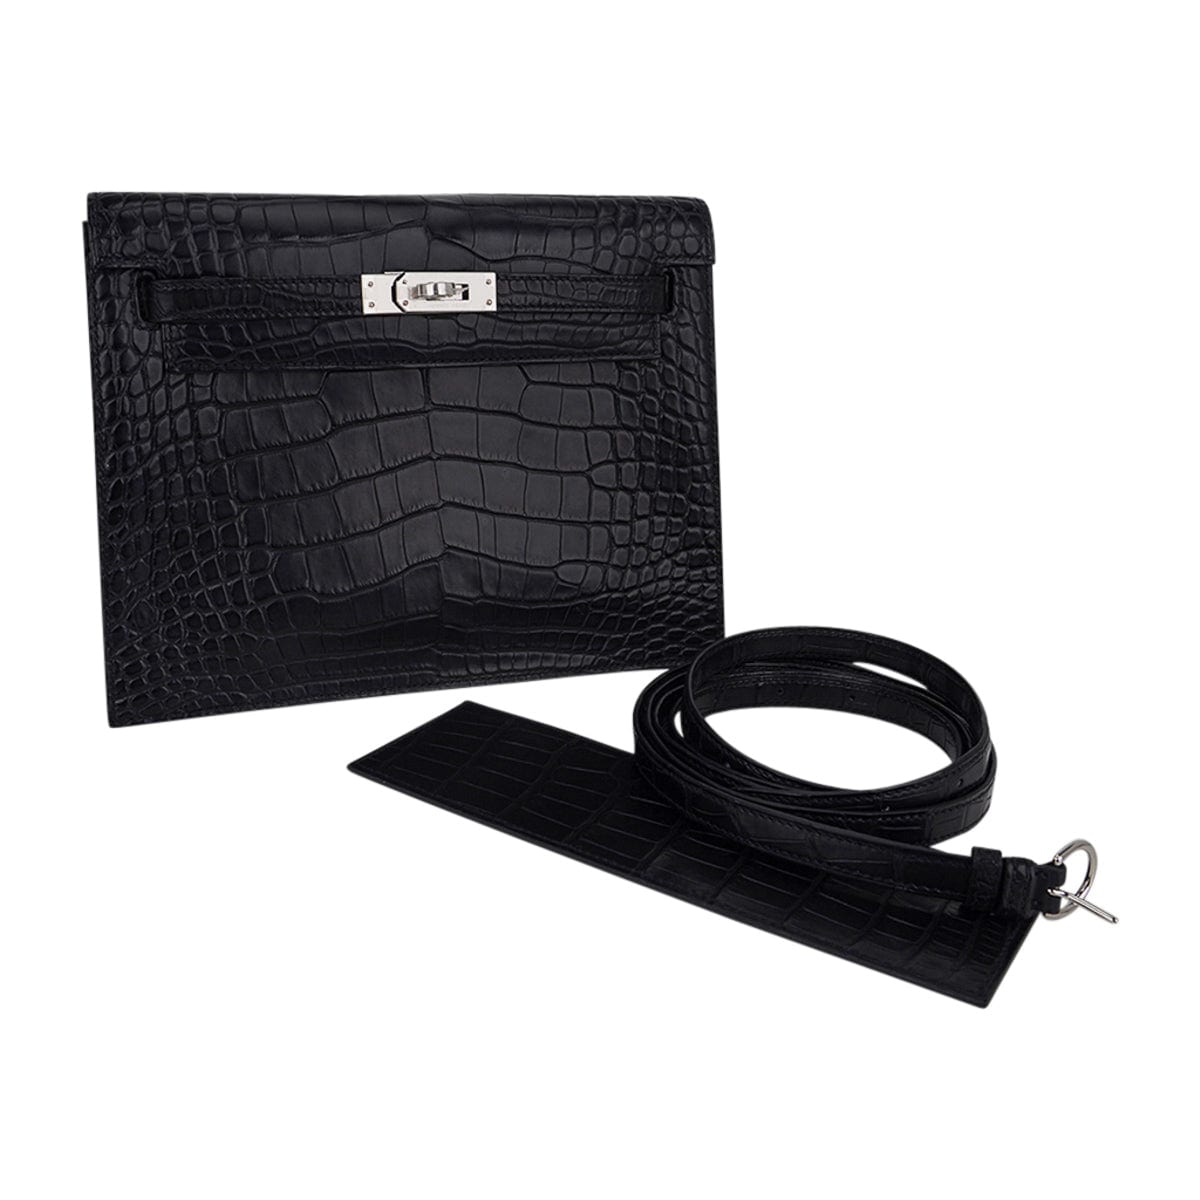 Kelly danse leather crossbody bag Hermès Black in Leather - 36172398